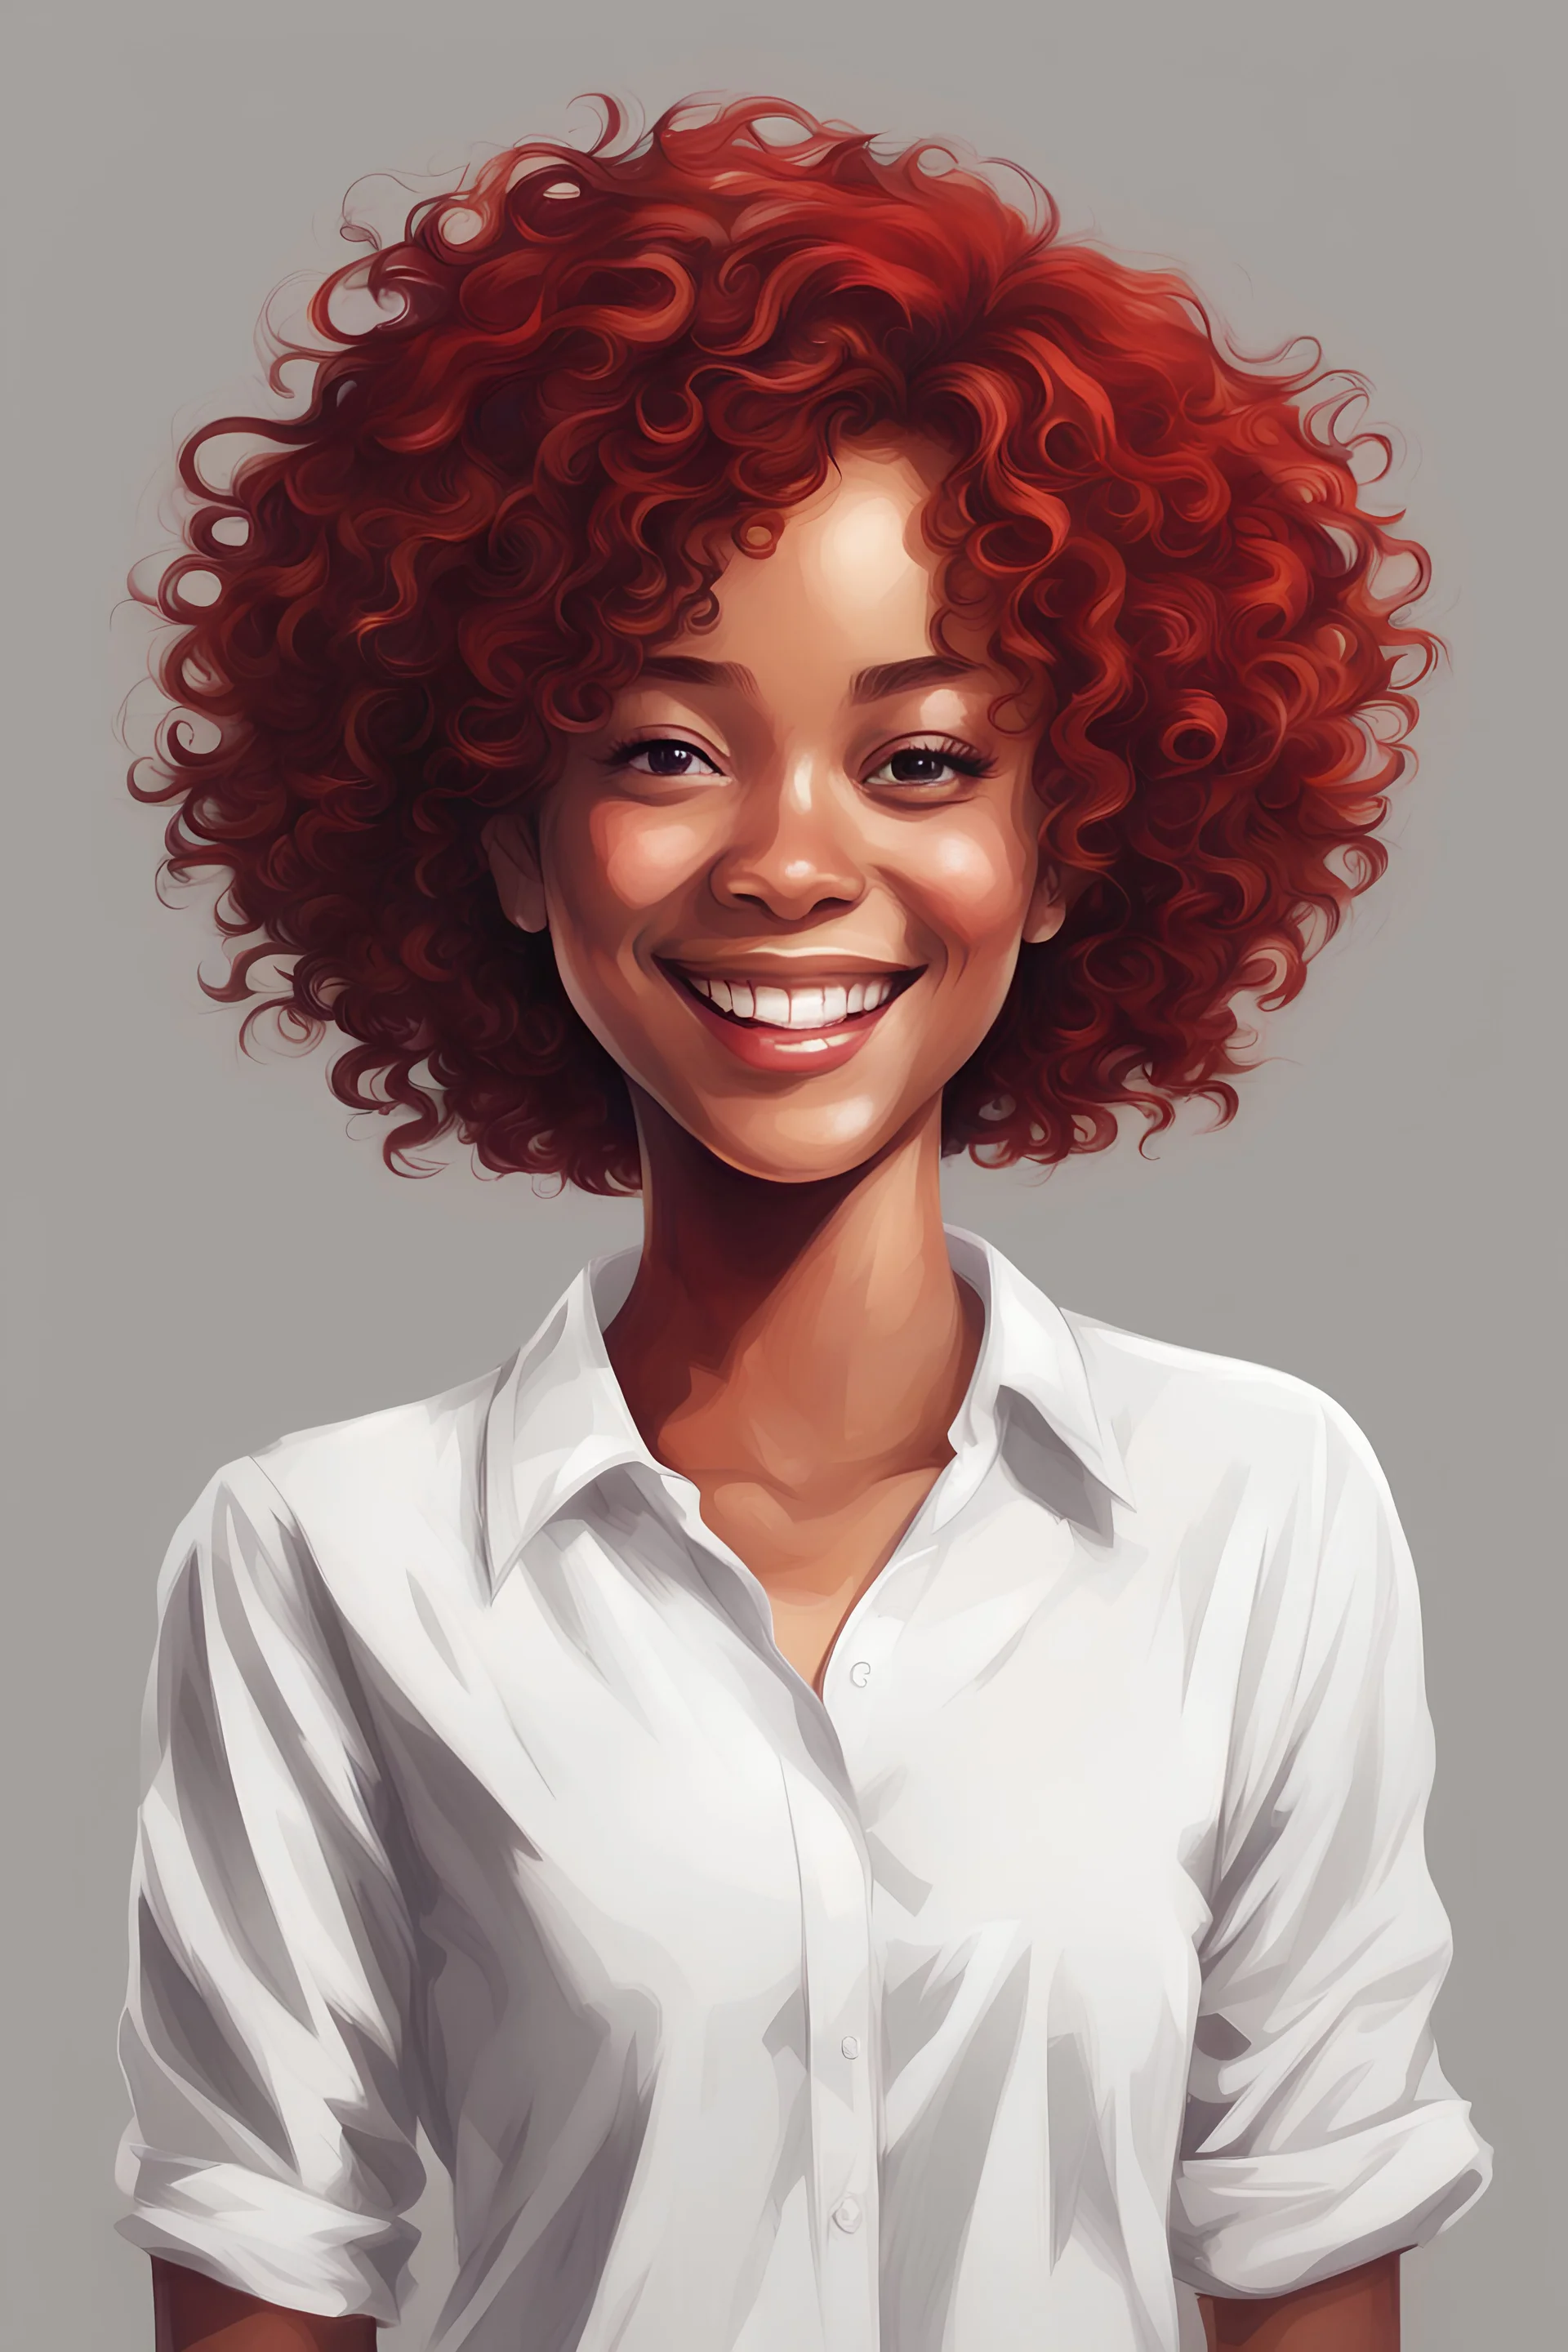 Design black girl short curly hair Red hair smiling happily White shirt